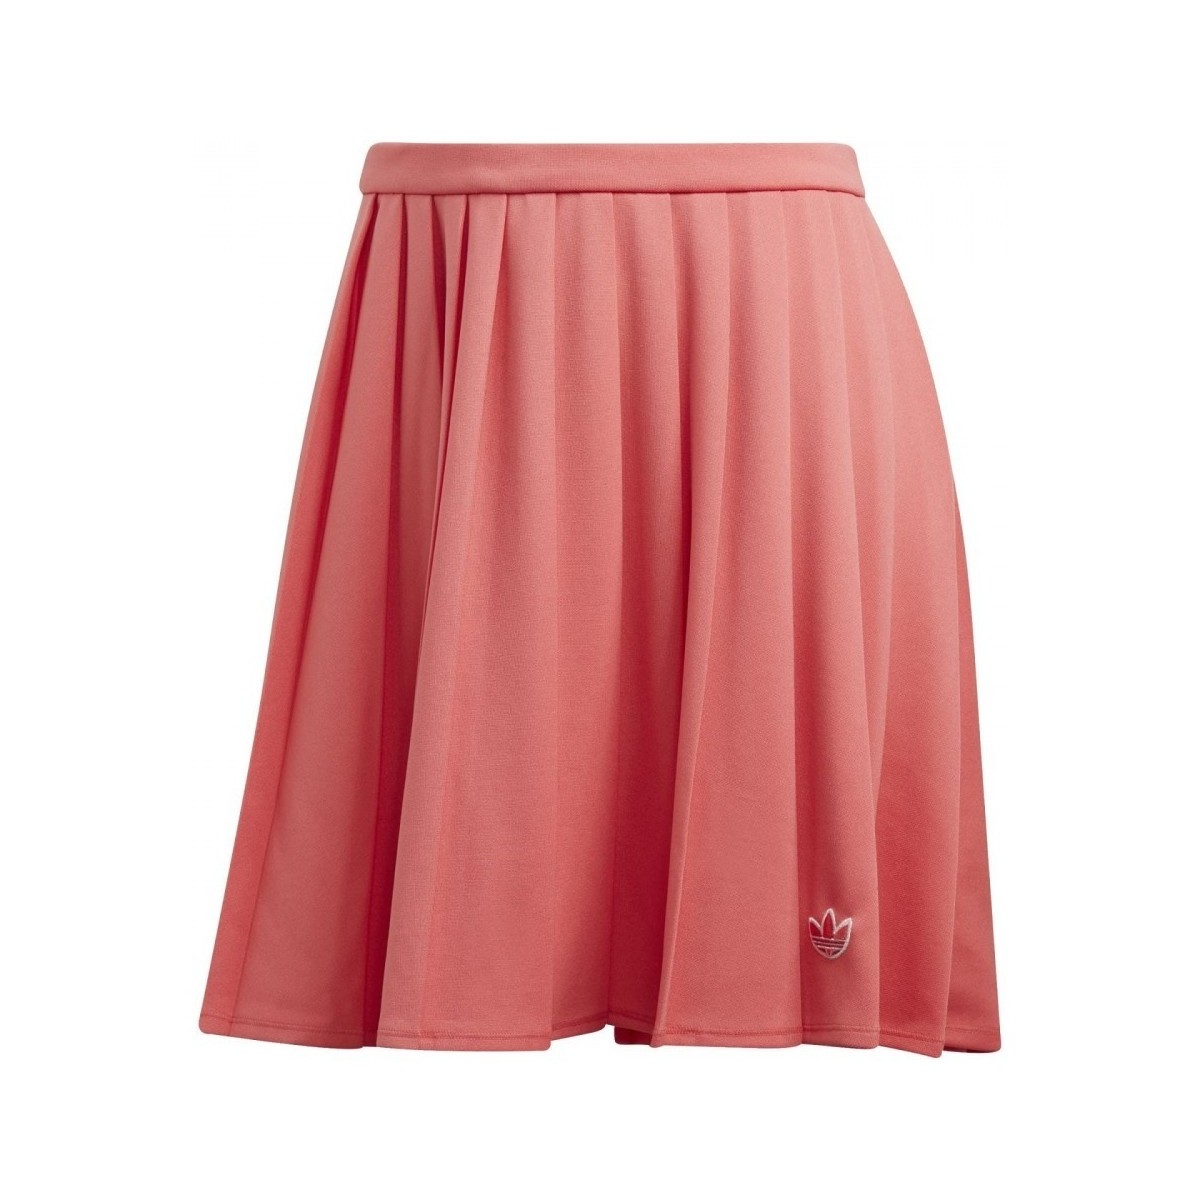 Vêtements Femme Jupes adidas Originals Skirt Rose